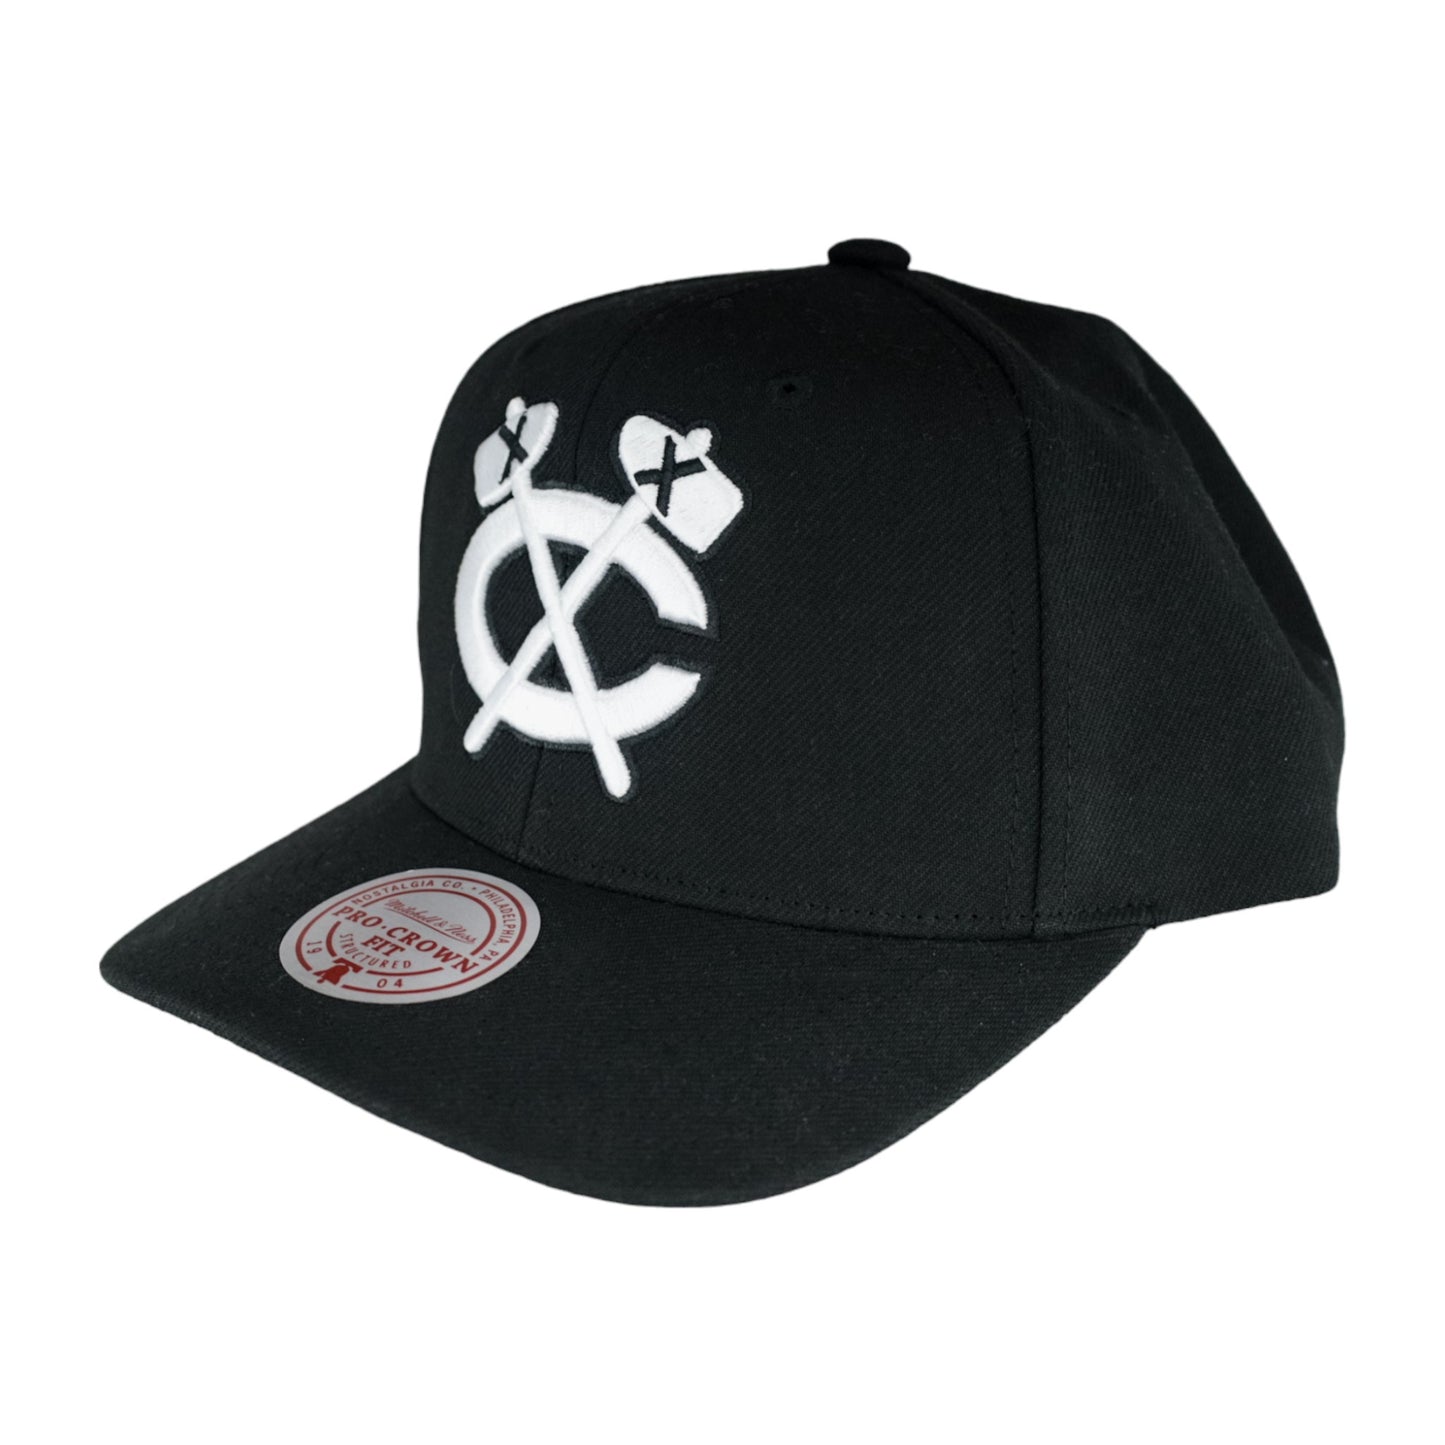 Chicago Blackhawks Pro Crown Tomahawk Mitchell & Ness Snapback Hat